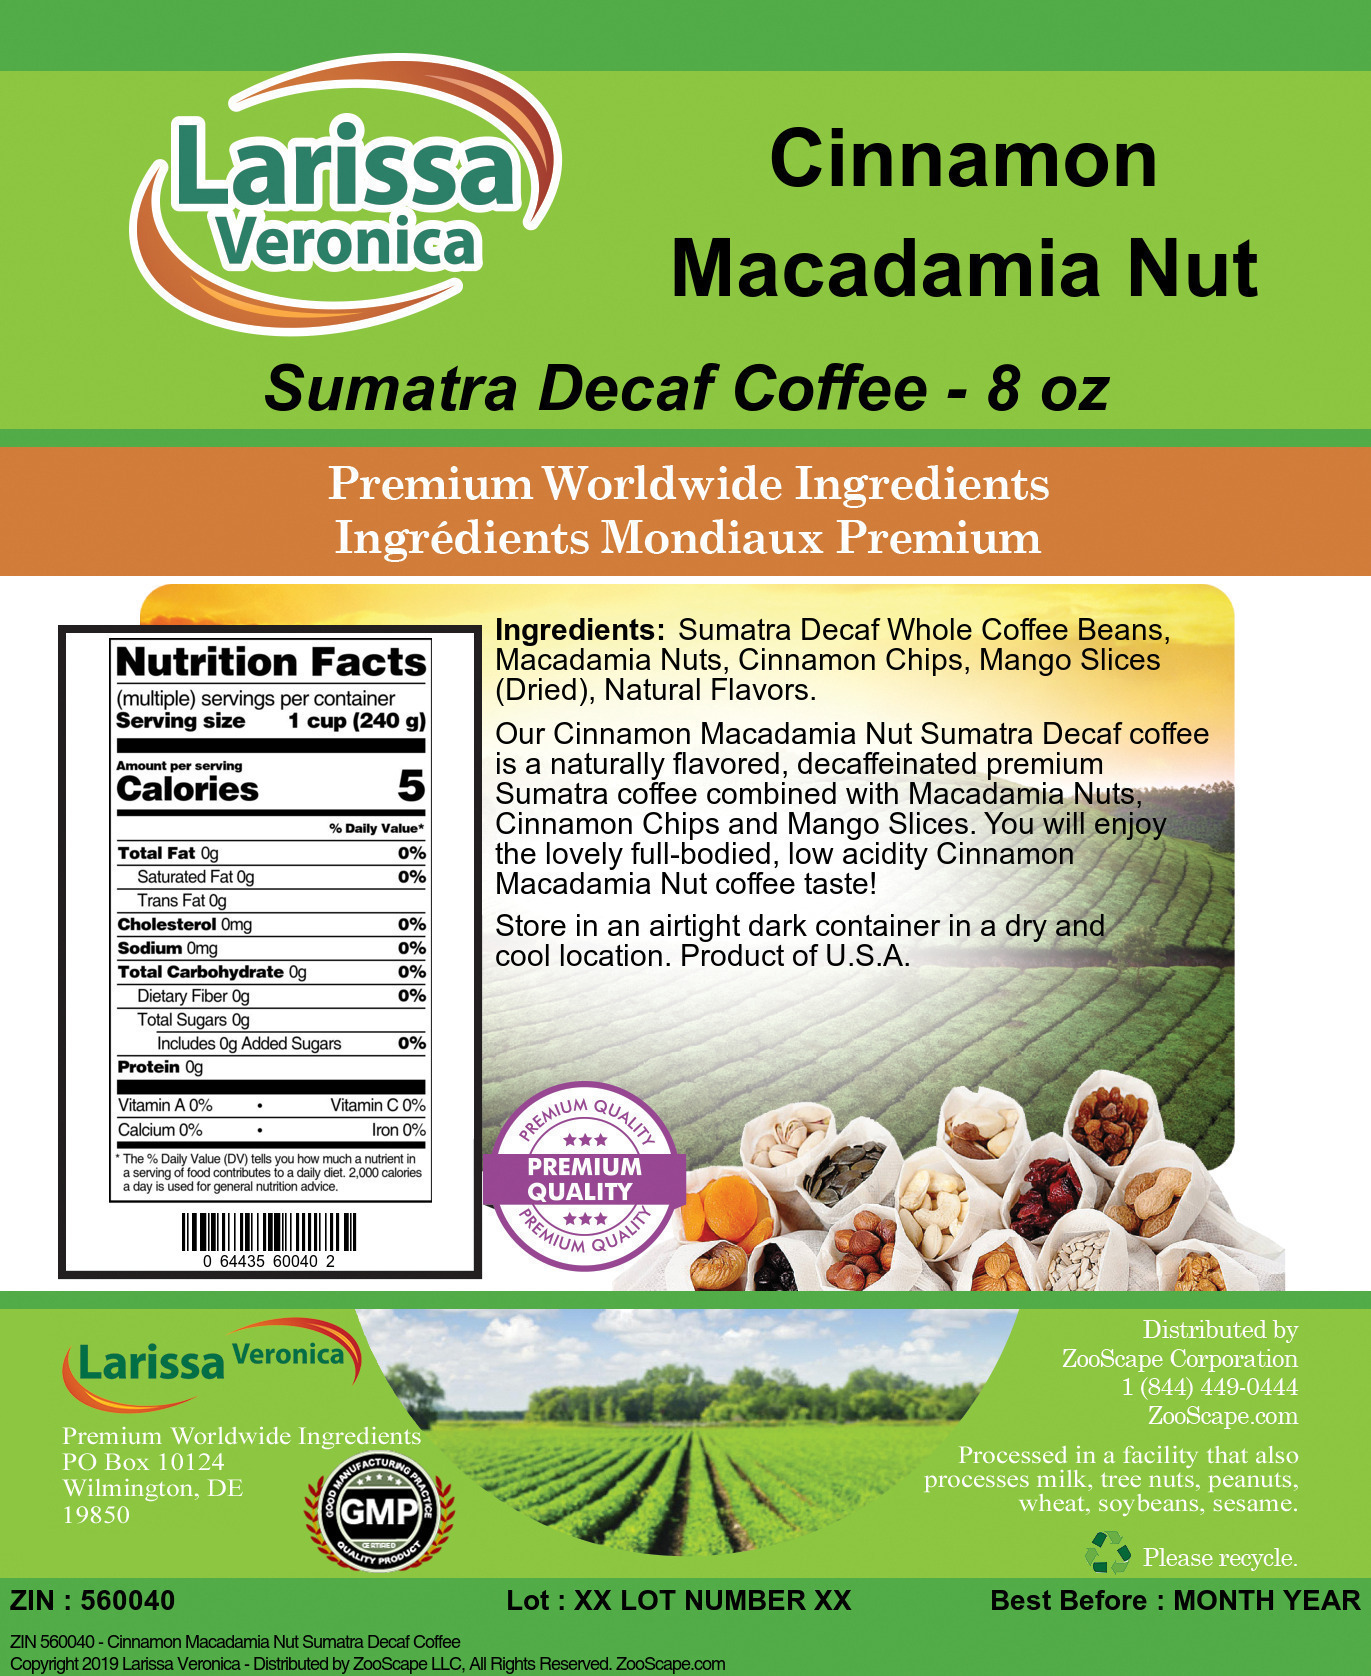 Cinnamon Macadamia Nut Sumatra Decaf Coffee - Label